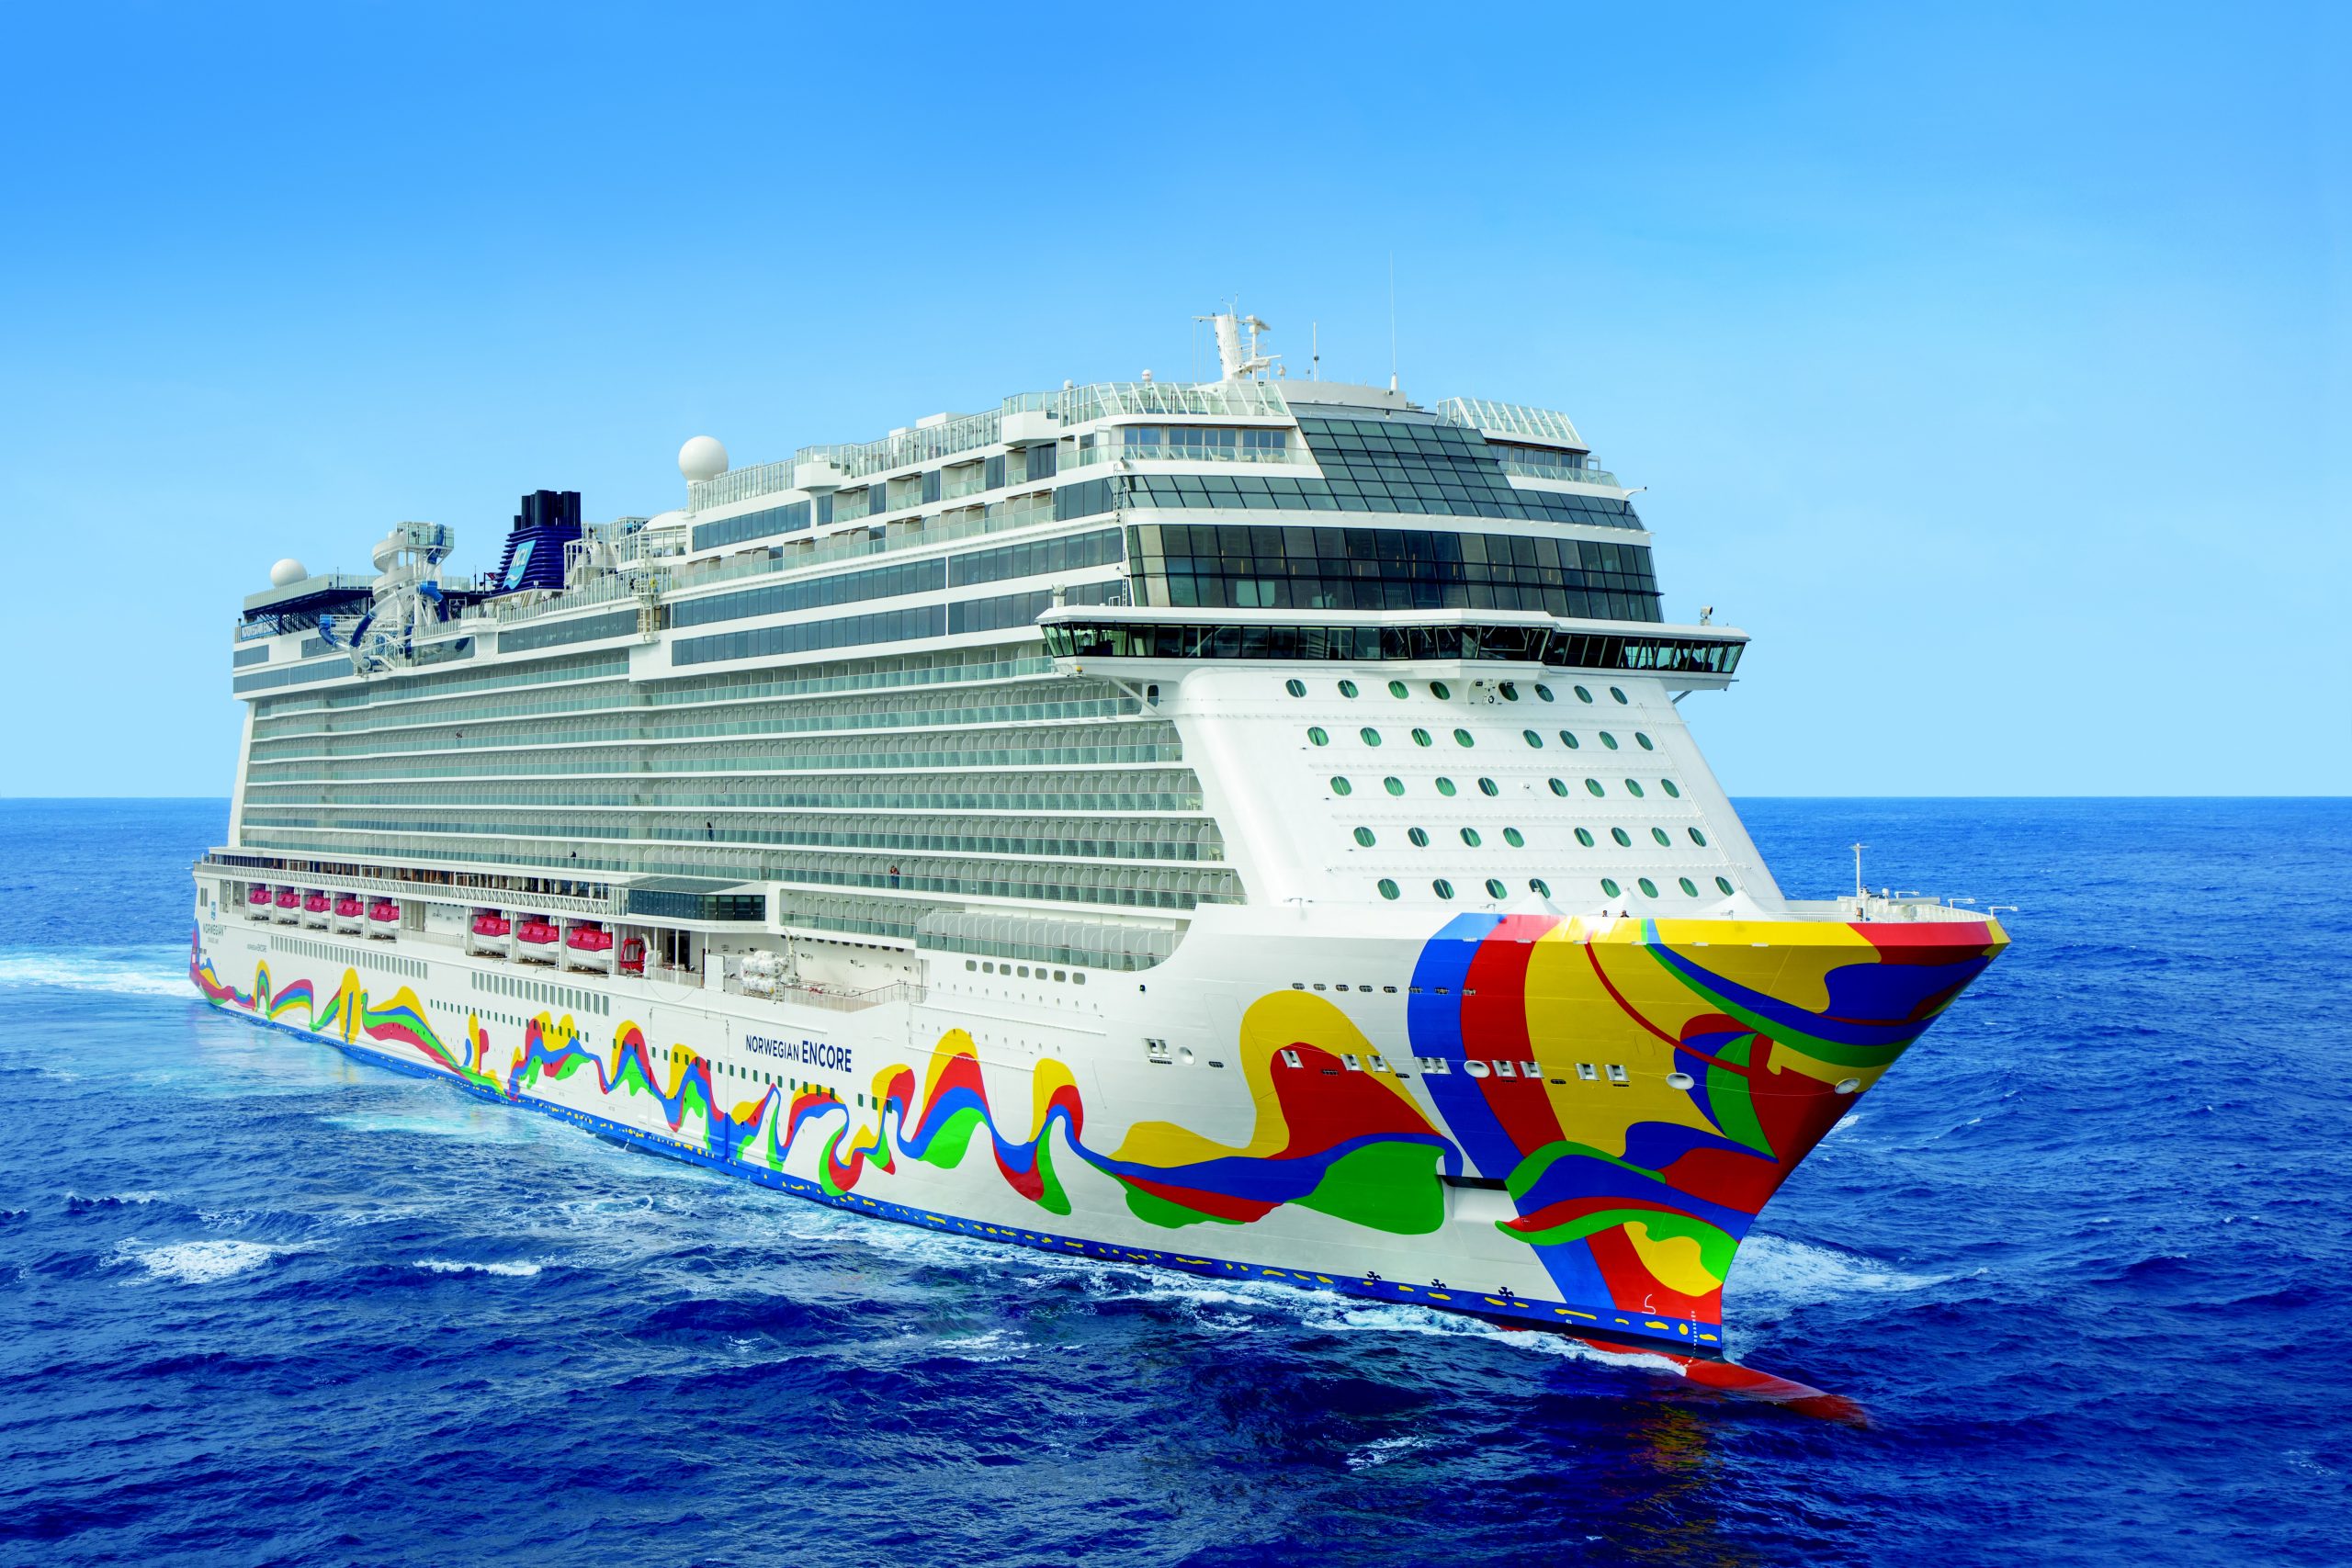 Cruise Ships - Introducing the Norwegian Encore Cruise Ship by Norwegian Cruise Line